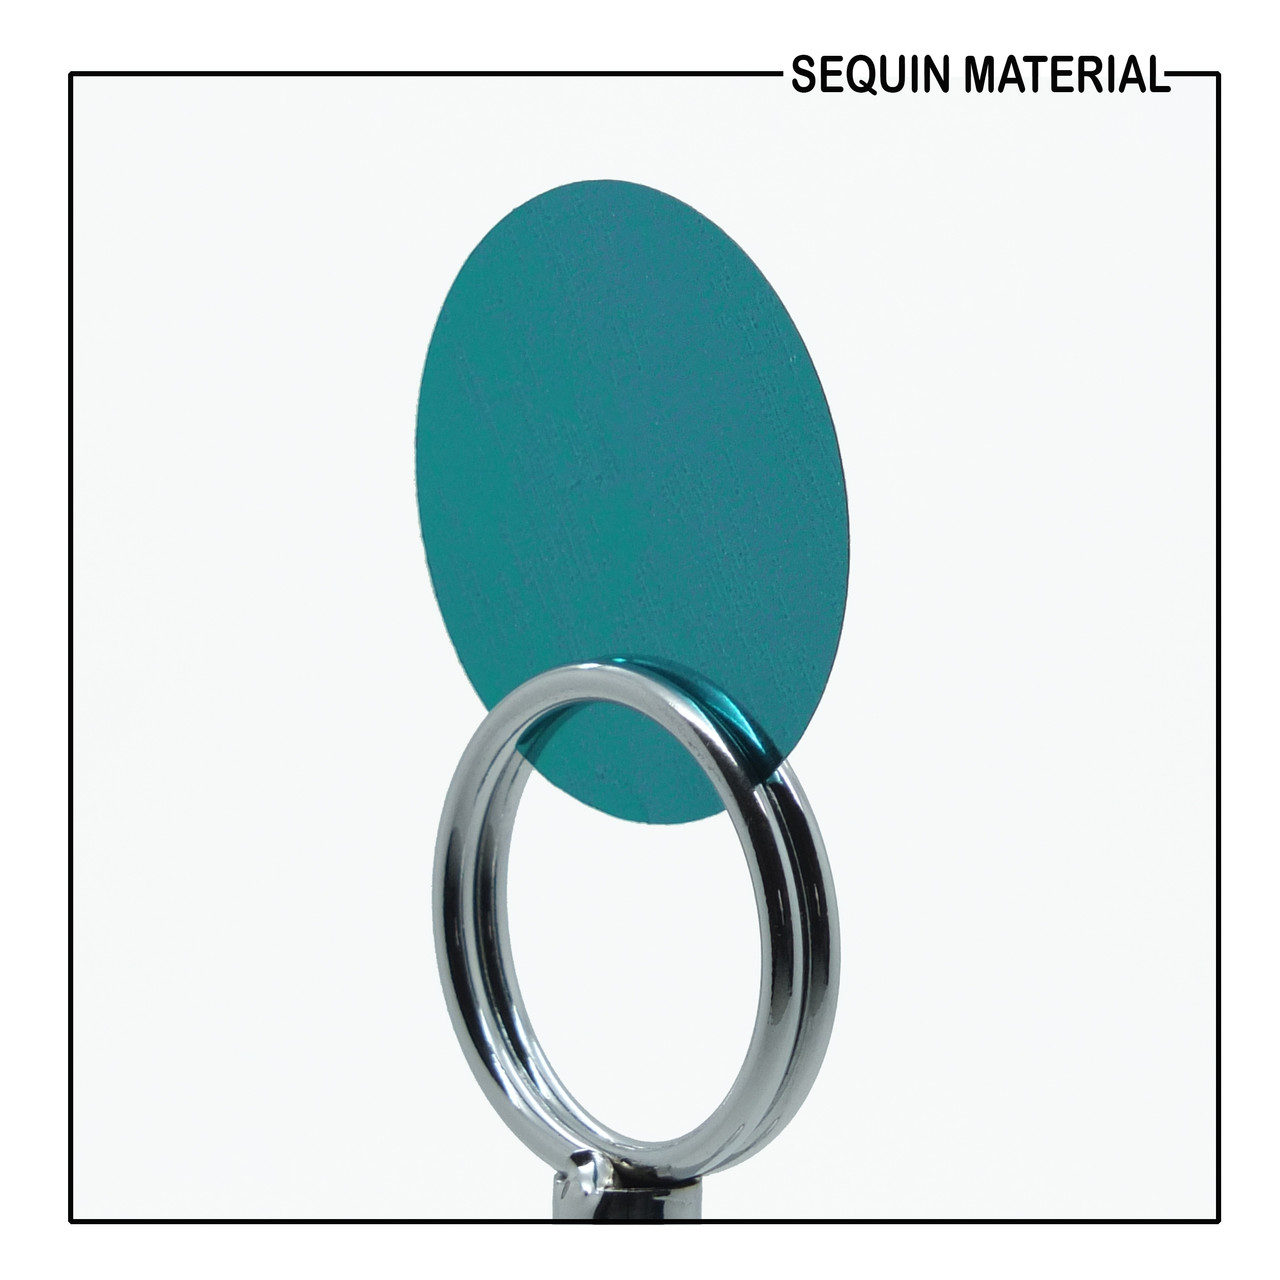 SequinsUSA Teal Green Shiny Metallic Sequin Material Film RL375